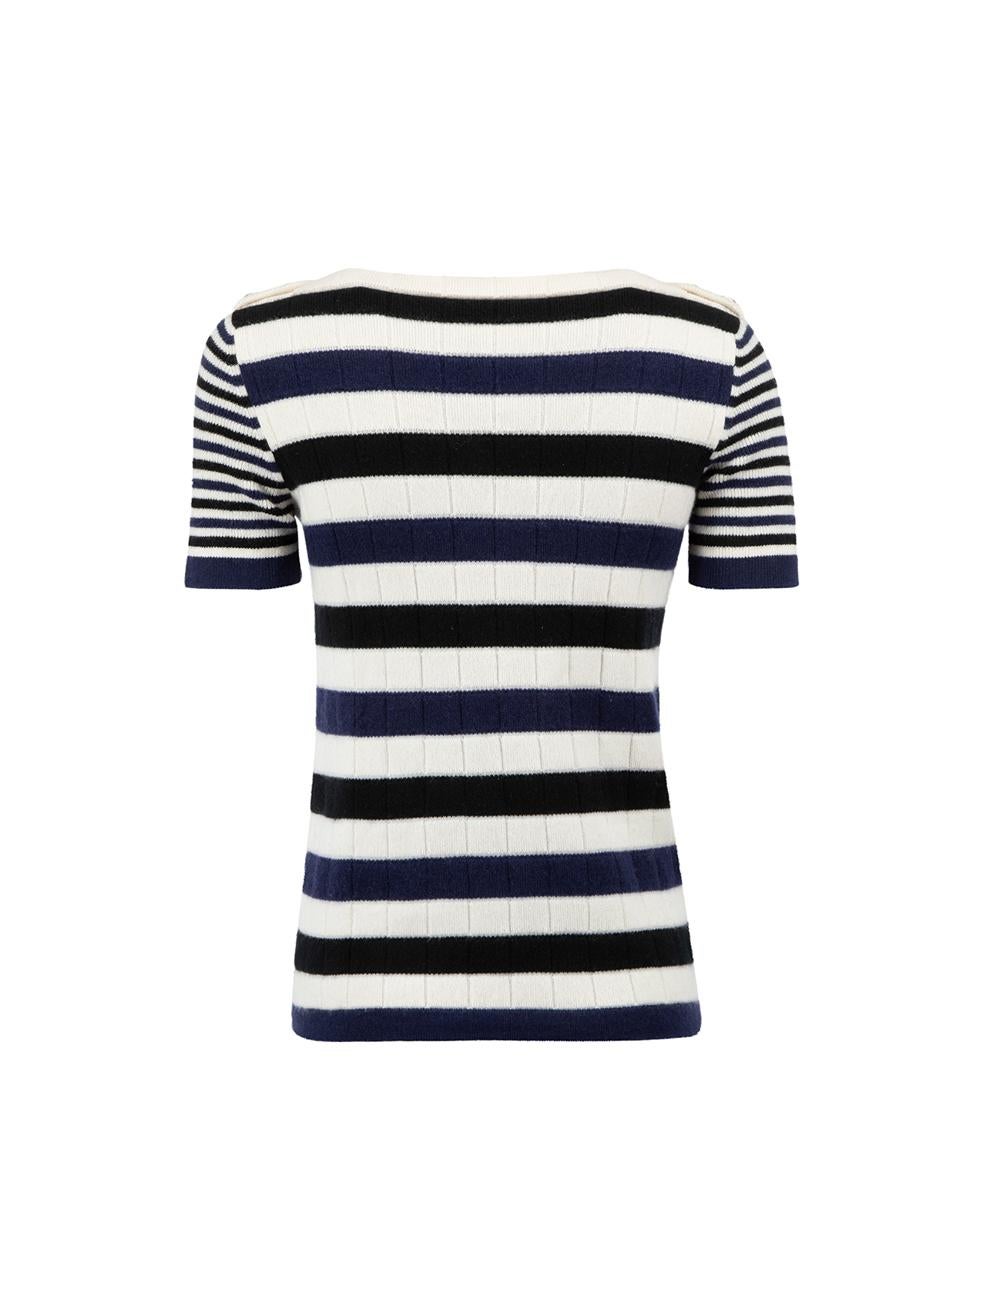 Black Chanel 2013 Blue & White Cashmere Striped Jumper Size S